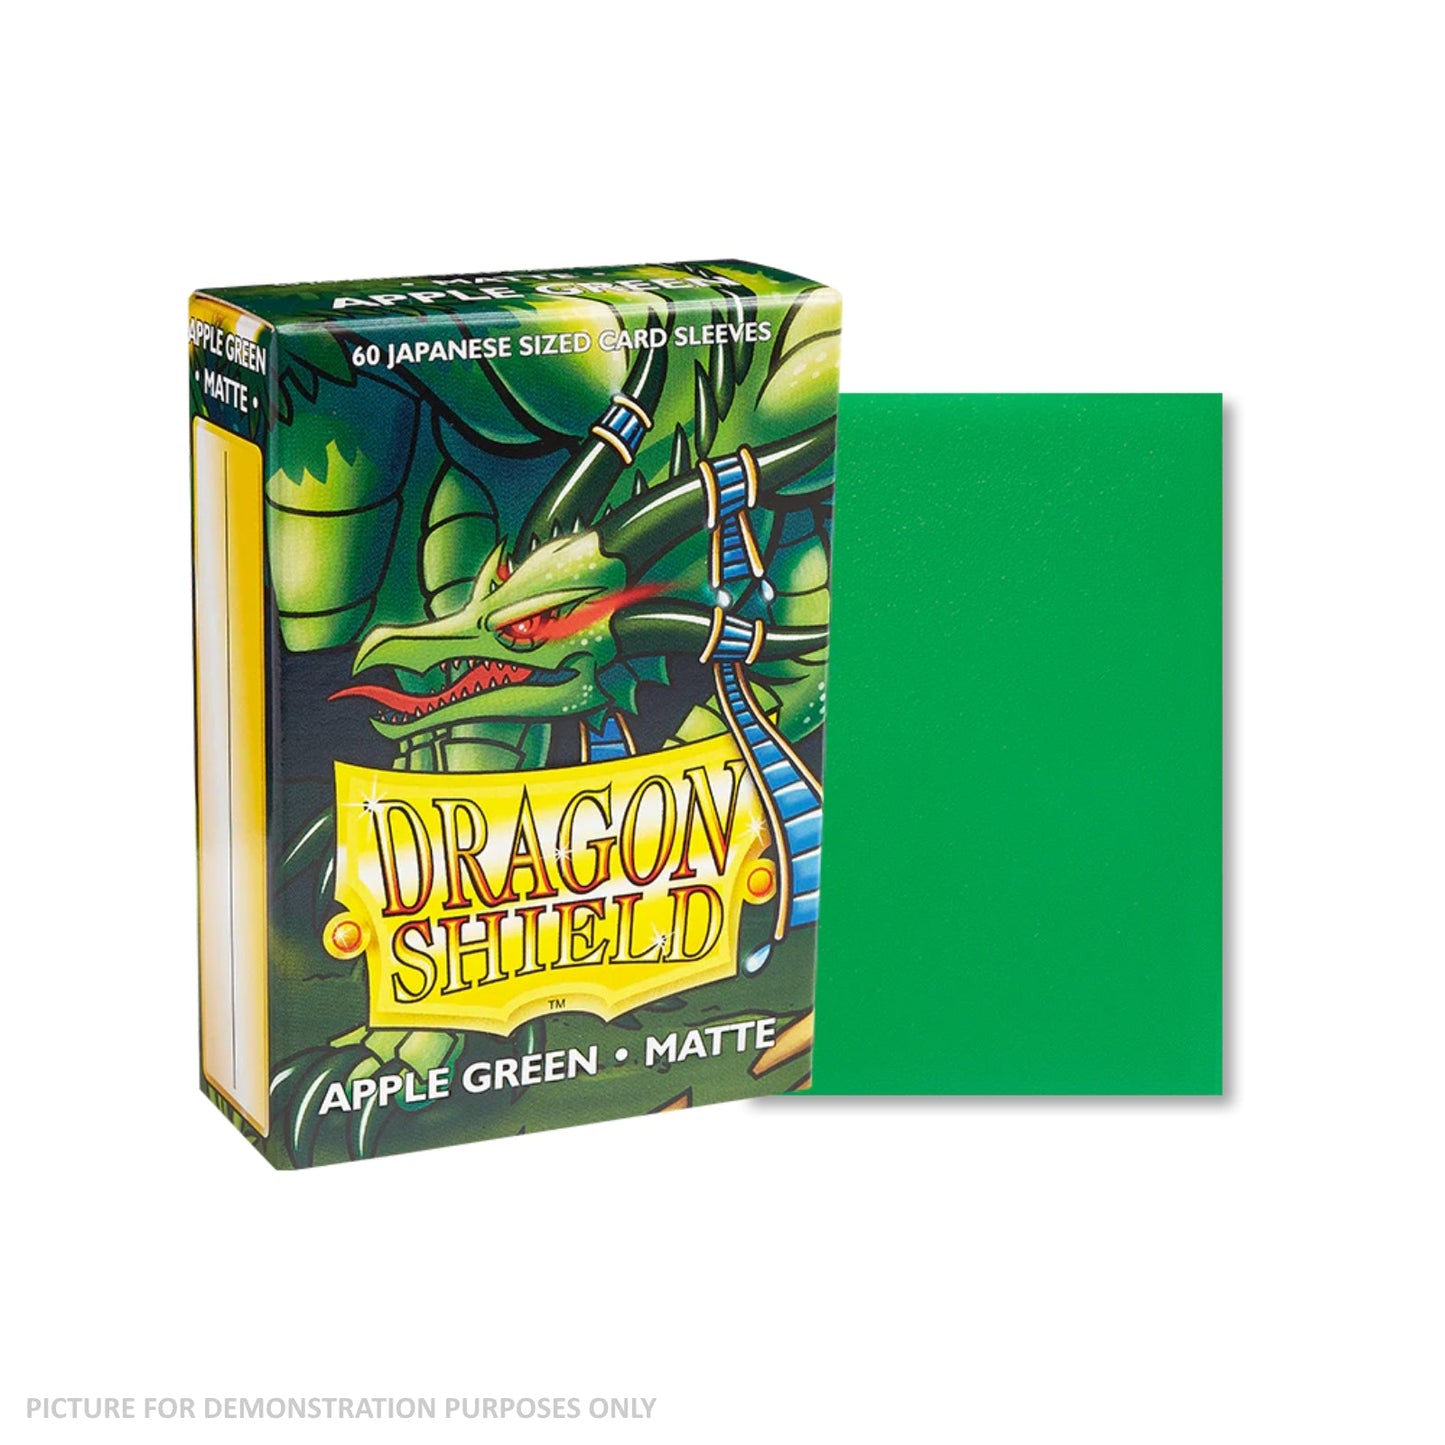 Dragon Shield 60 Japanese Size Card Sleeves - Matte Apple Green